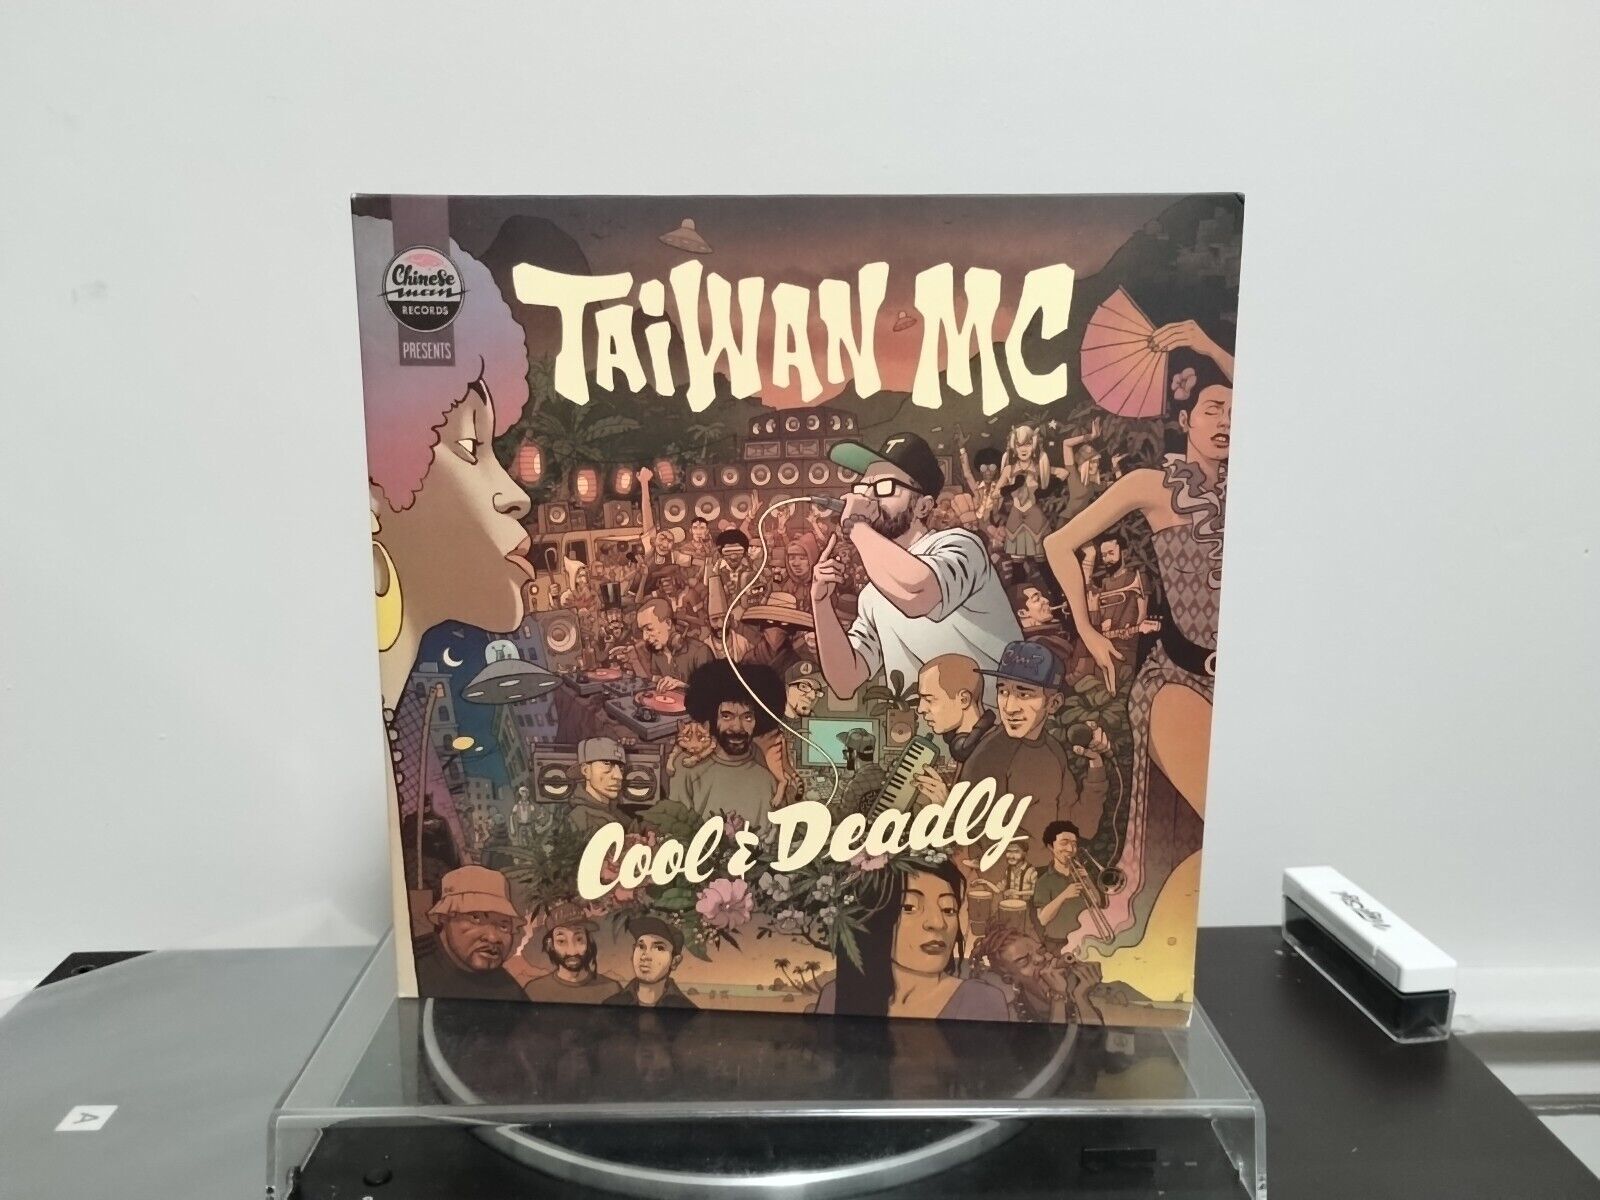 Cool & Deadly by Taiwan MC Vinyl NM